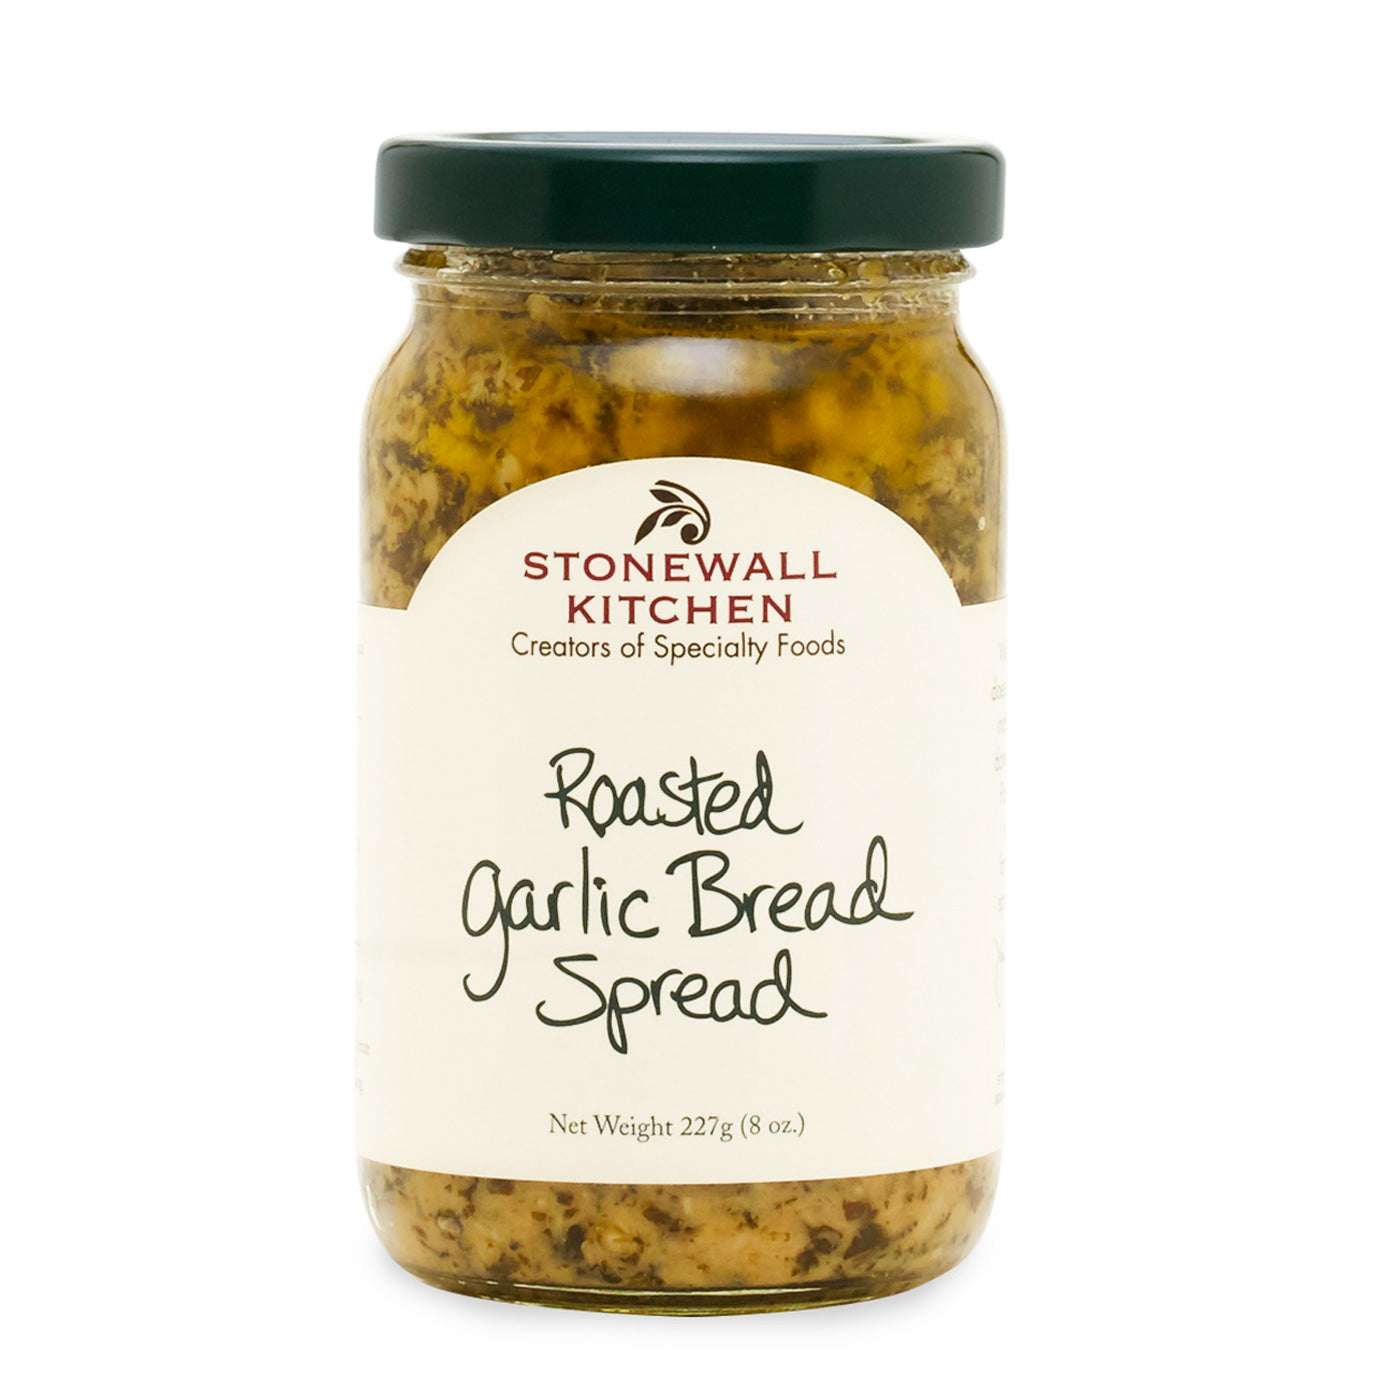 Stonewall Kitchen Roasted Garlic Bread Spread - Olive Oil Etcetera 